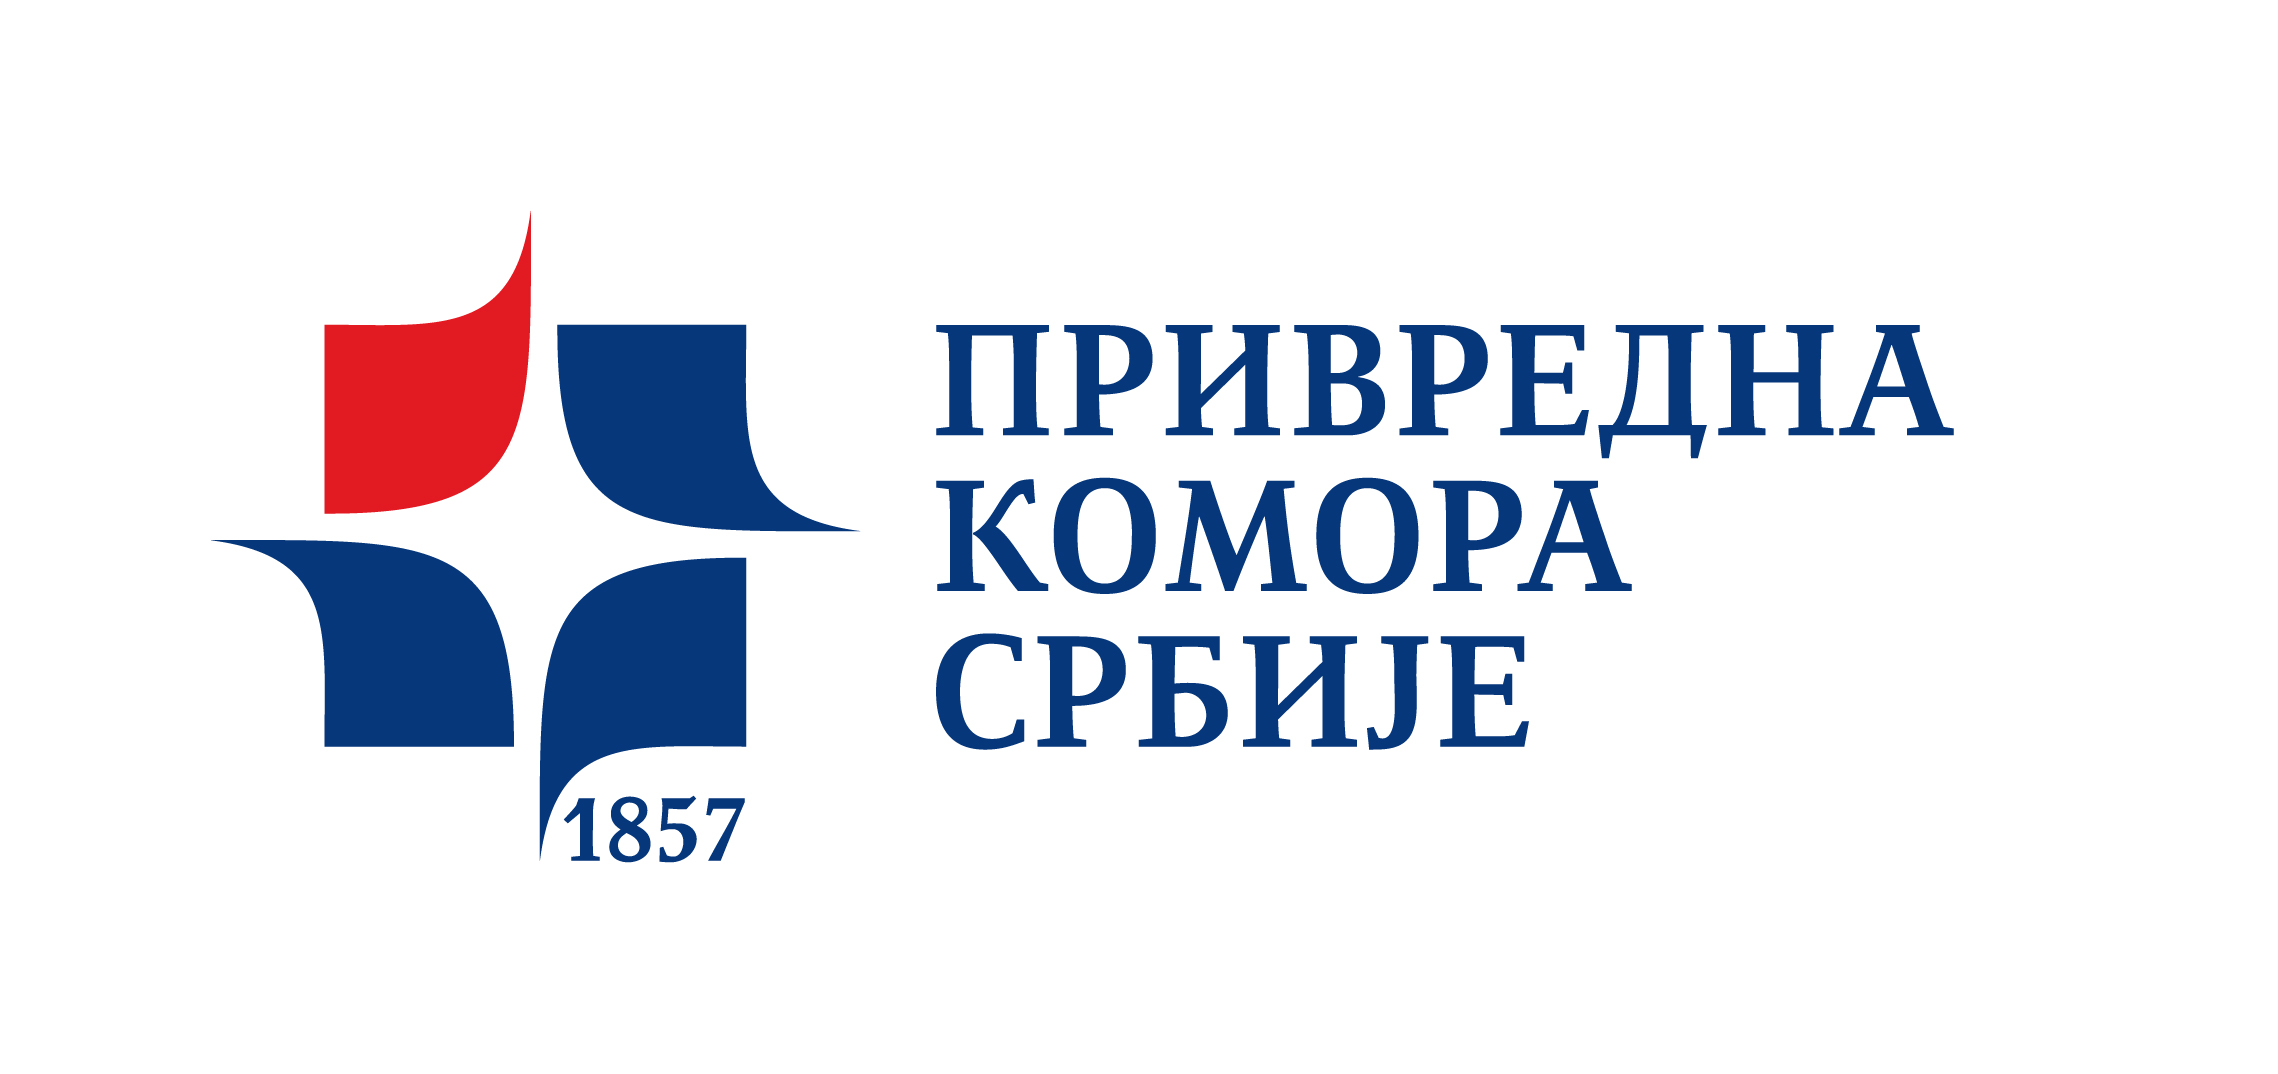 Praktična primena kvalifikovanih elektronskih sertifikata i elektronski servisi u Srbiji